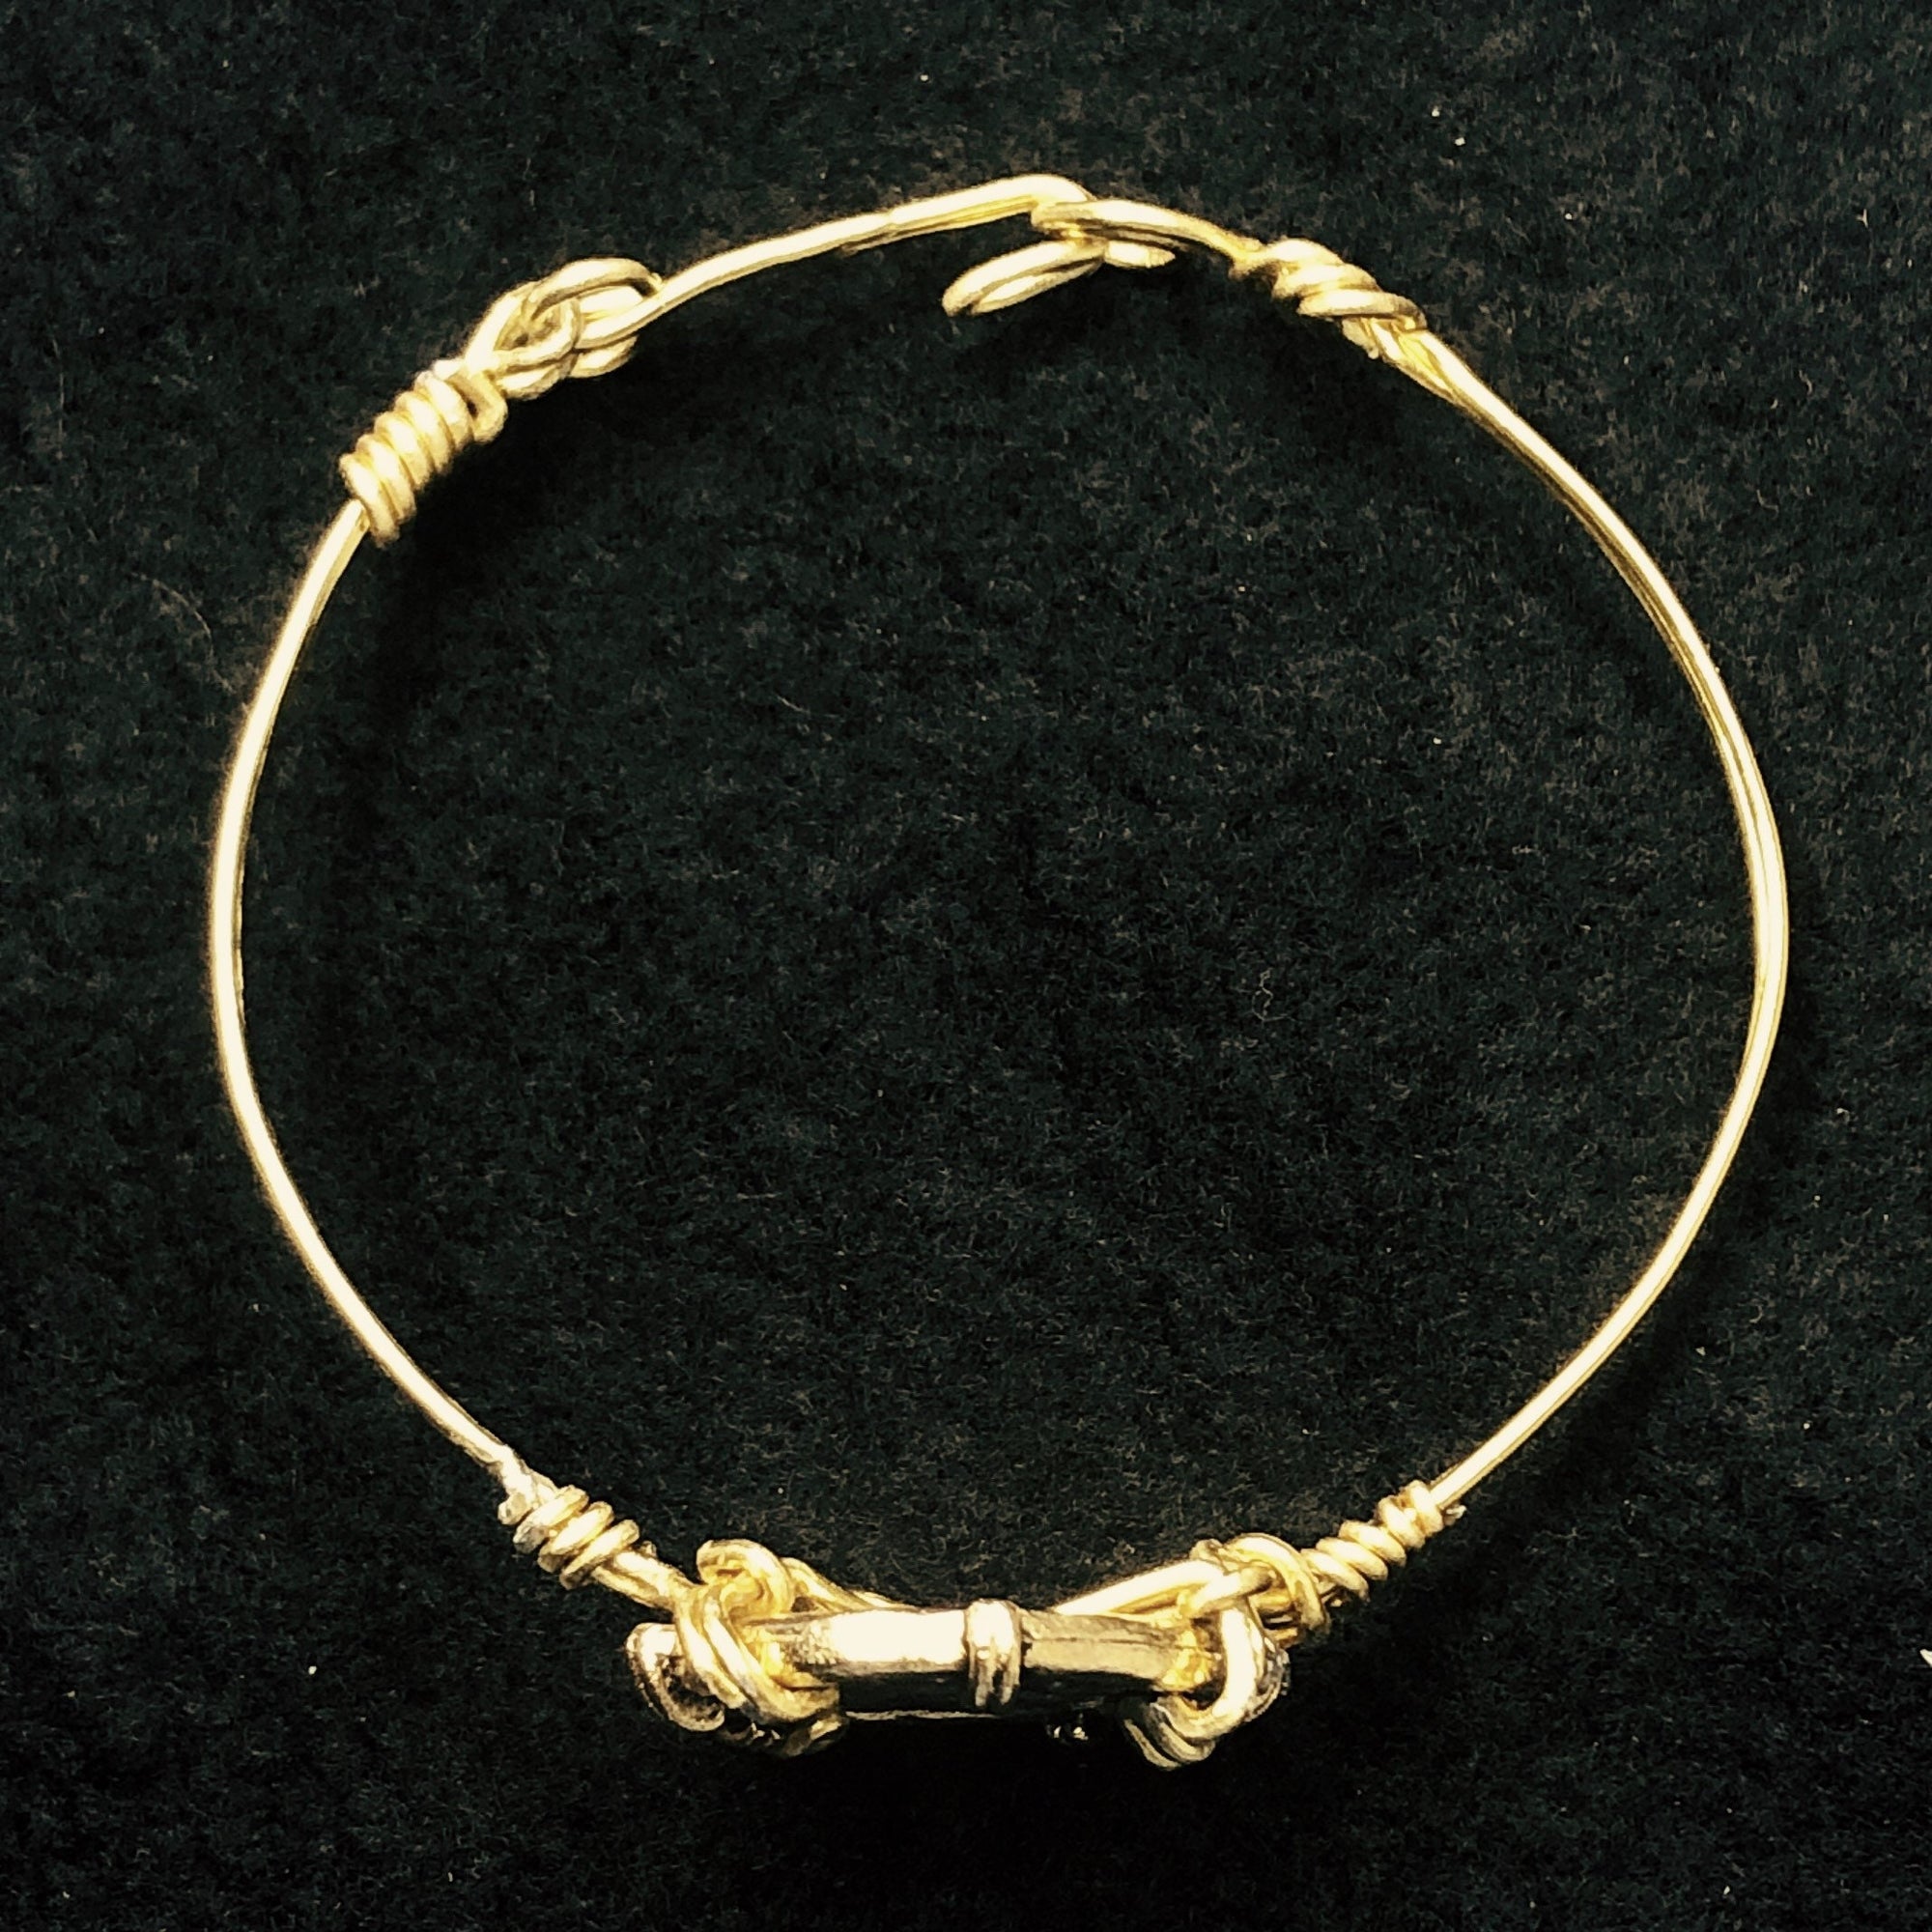 Handmade ancient roman coin replica bracelet